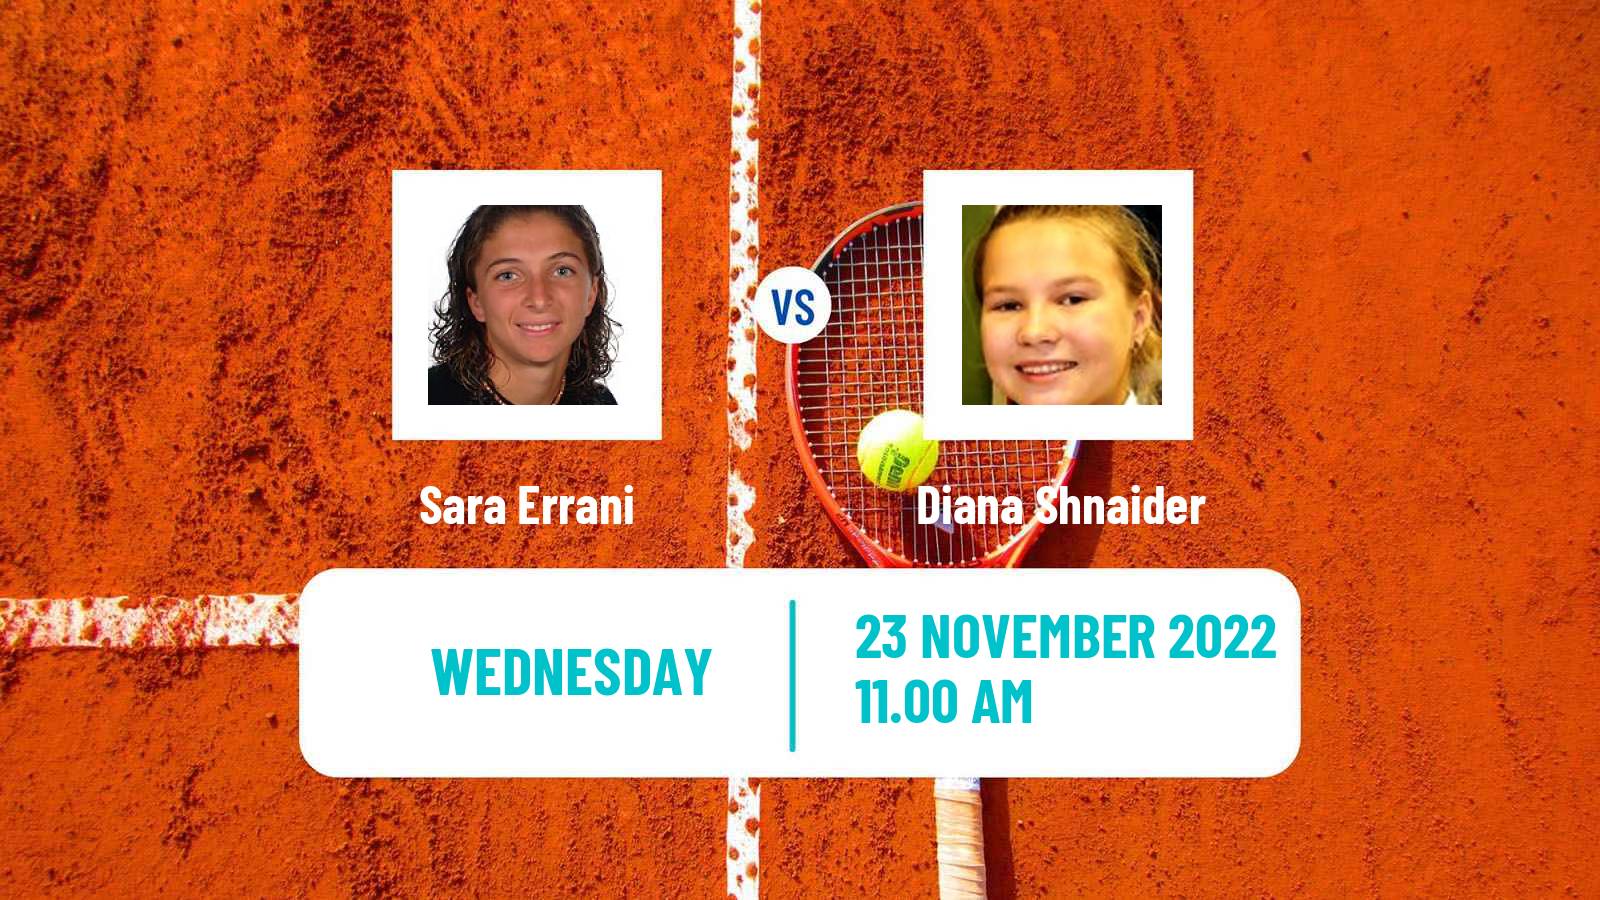 Tennis ATP Challenger Sara Errani - Diana Shnaider